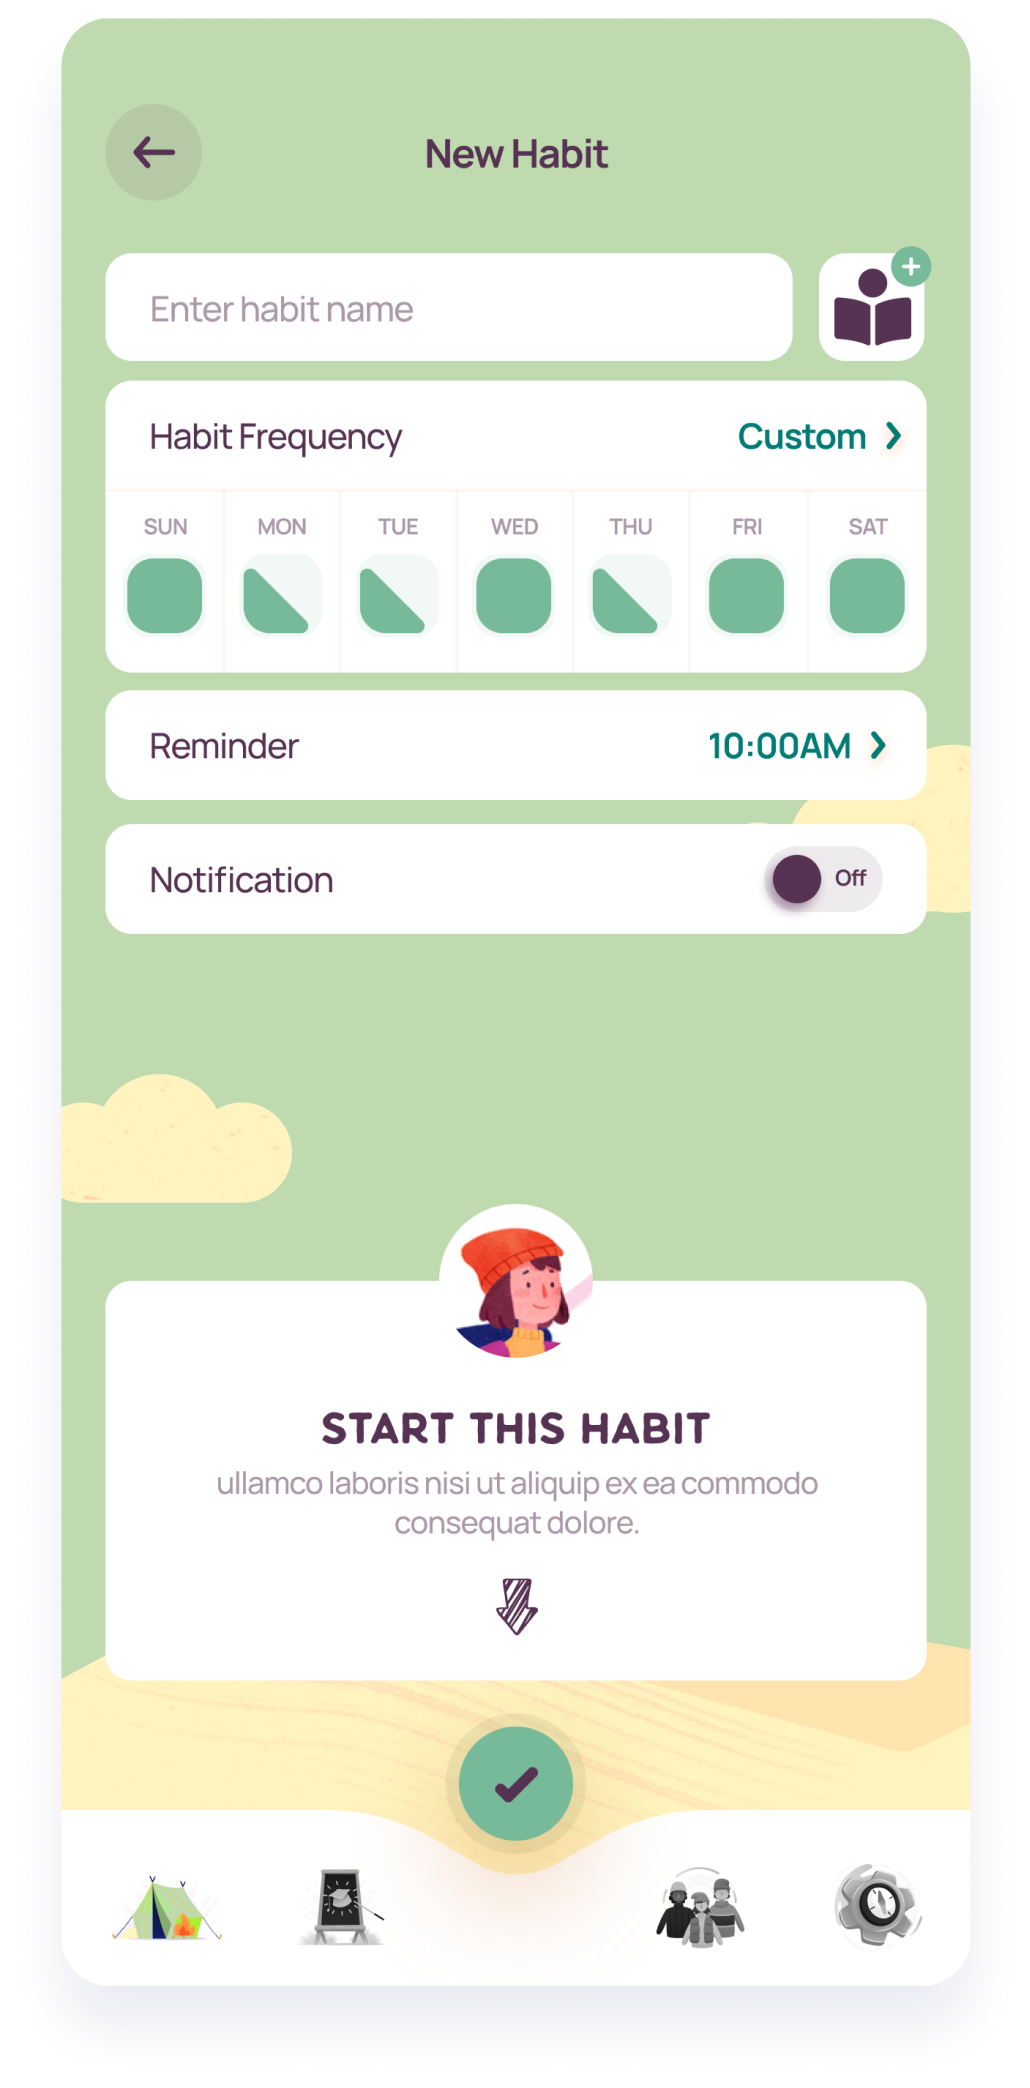  LifeBalance screen for creating a new habit 